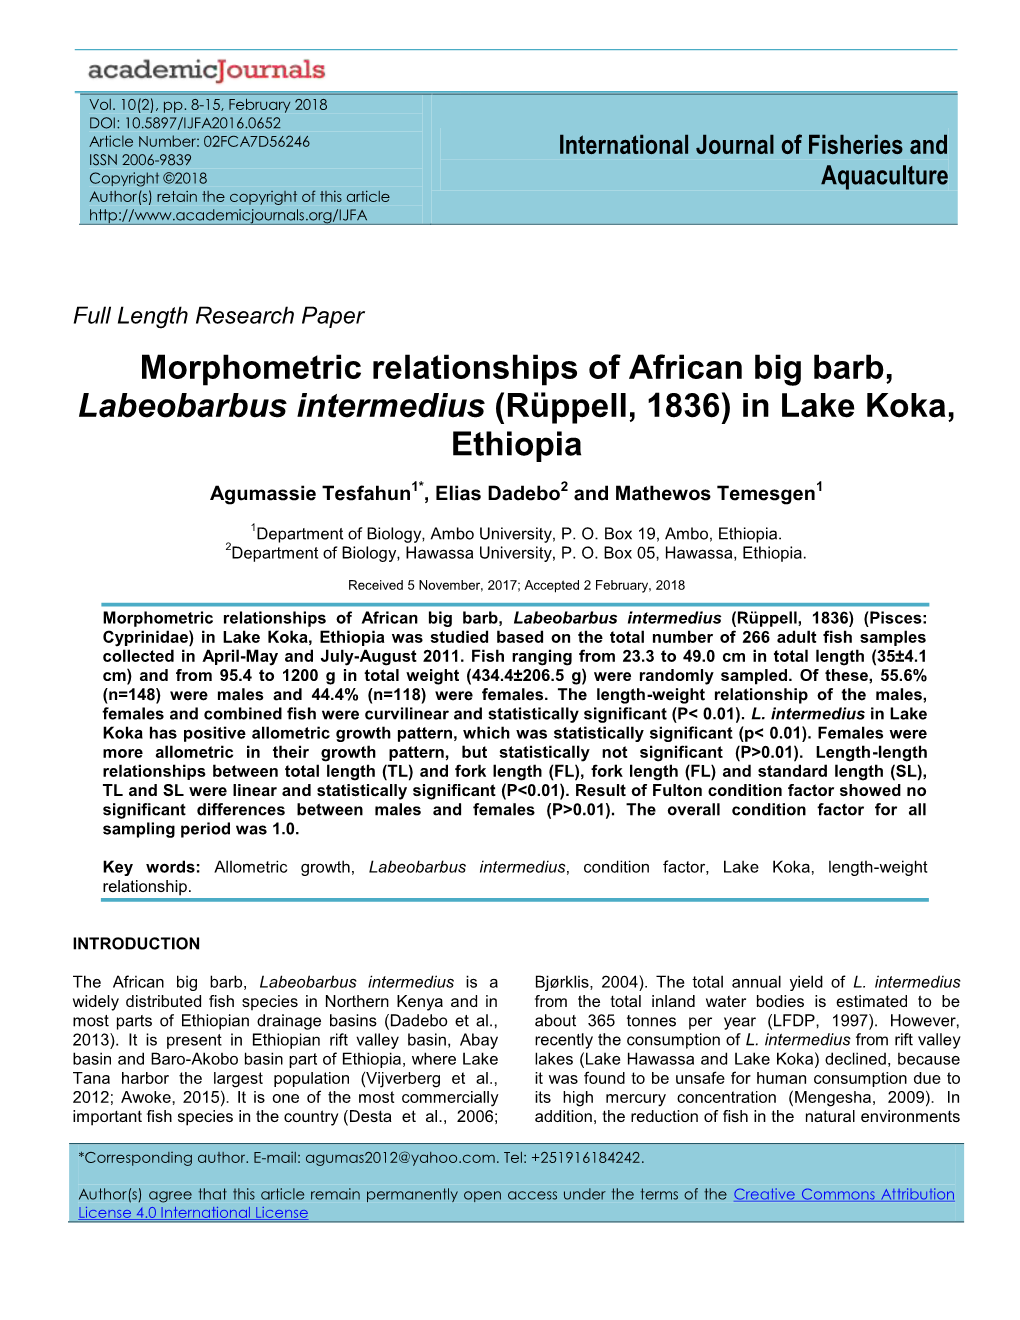 Morphometric Relationships of African Big Barb, Labeobarbus Intermedius (Rüppell, 1836) in Lake Koka, Ethiopia